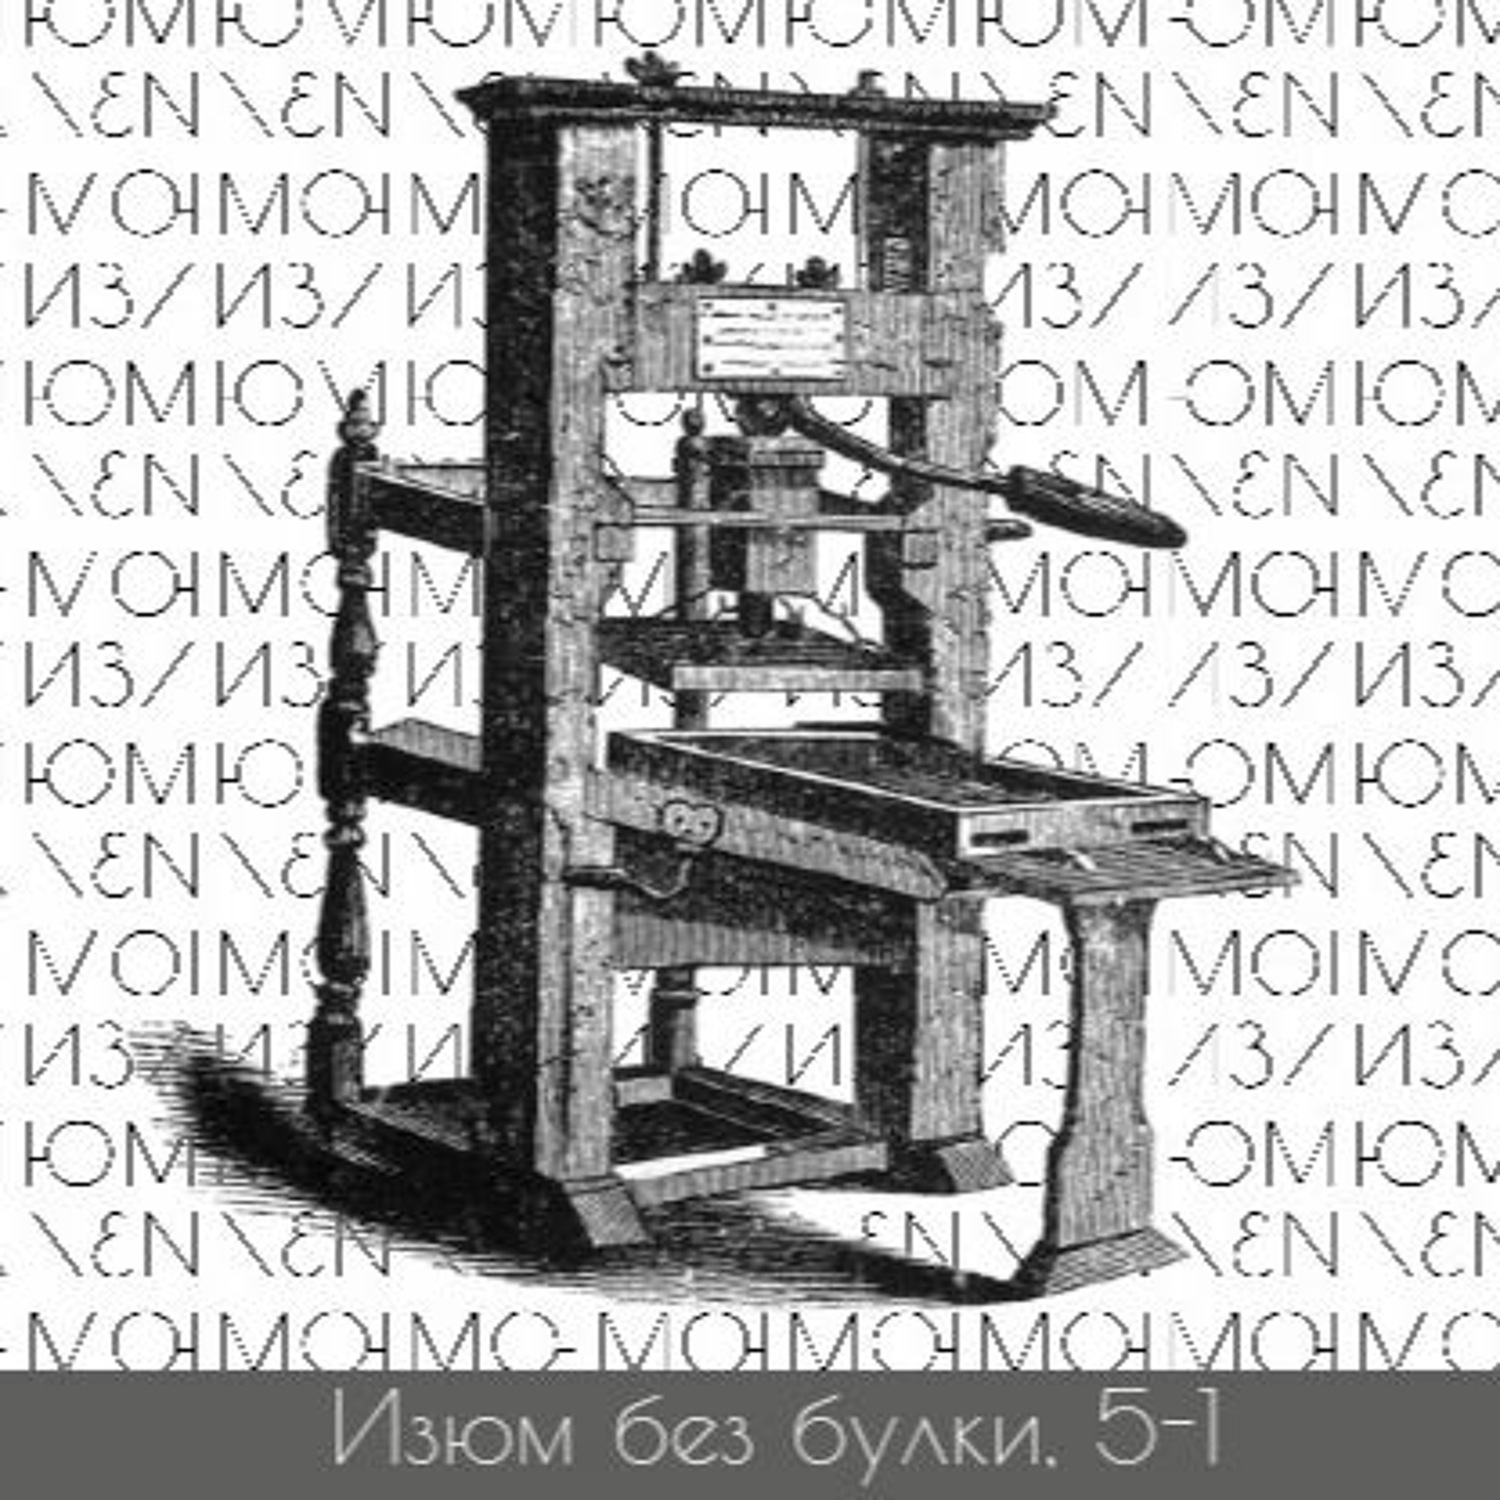 Invention of the century. Печатный станок Иоганна Гутенберга. Иоганн Гутенберг изобретение. Первый печатный станок изобрел Иоганн Гутенберг. Гутенберг книгопечатание.